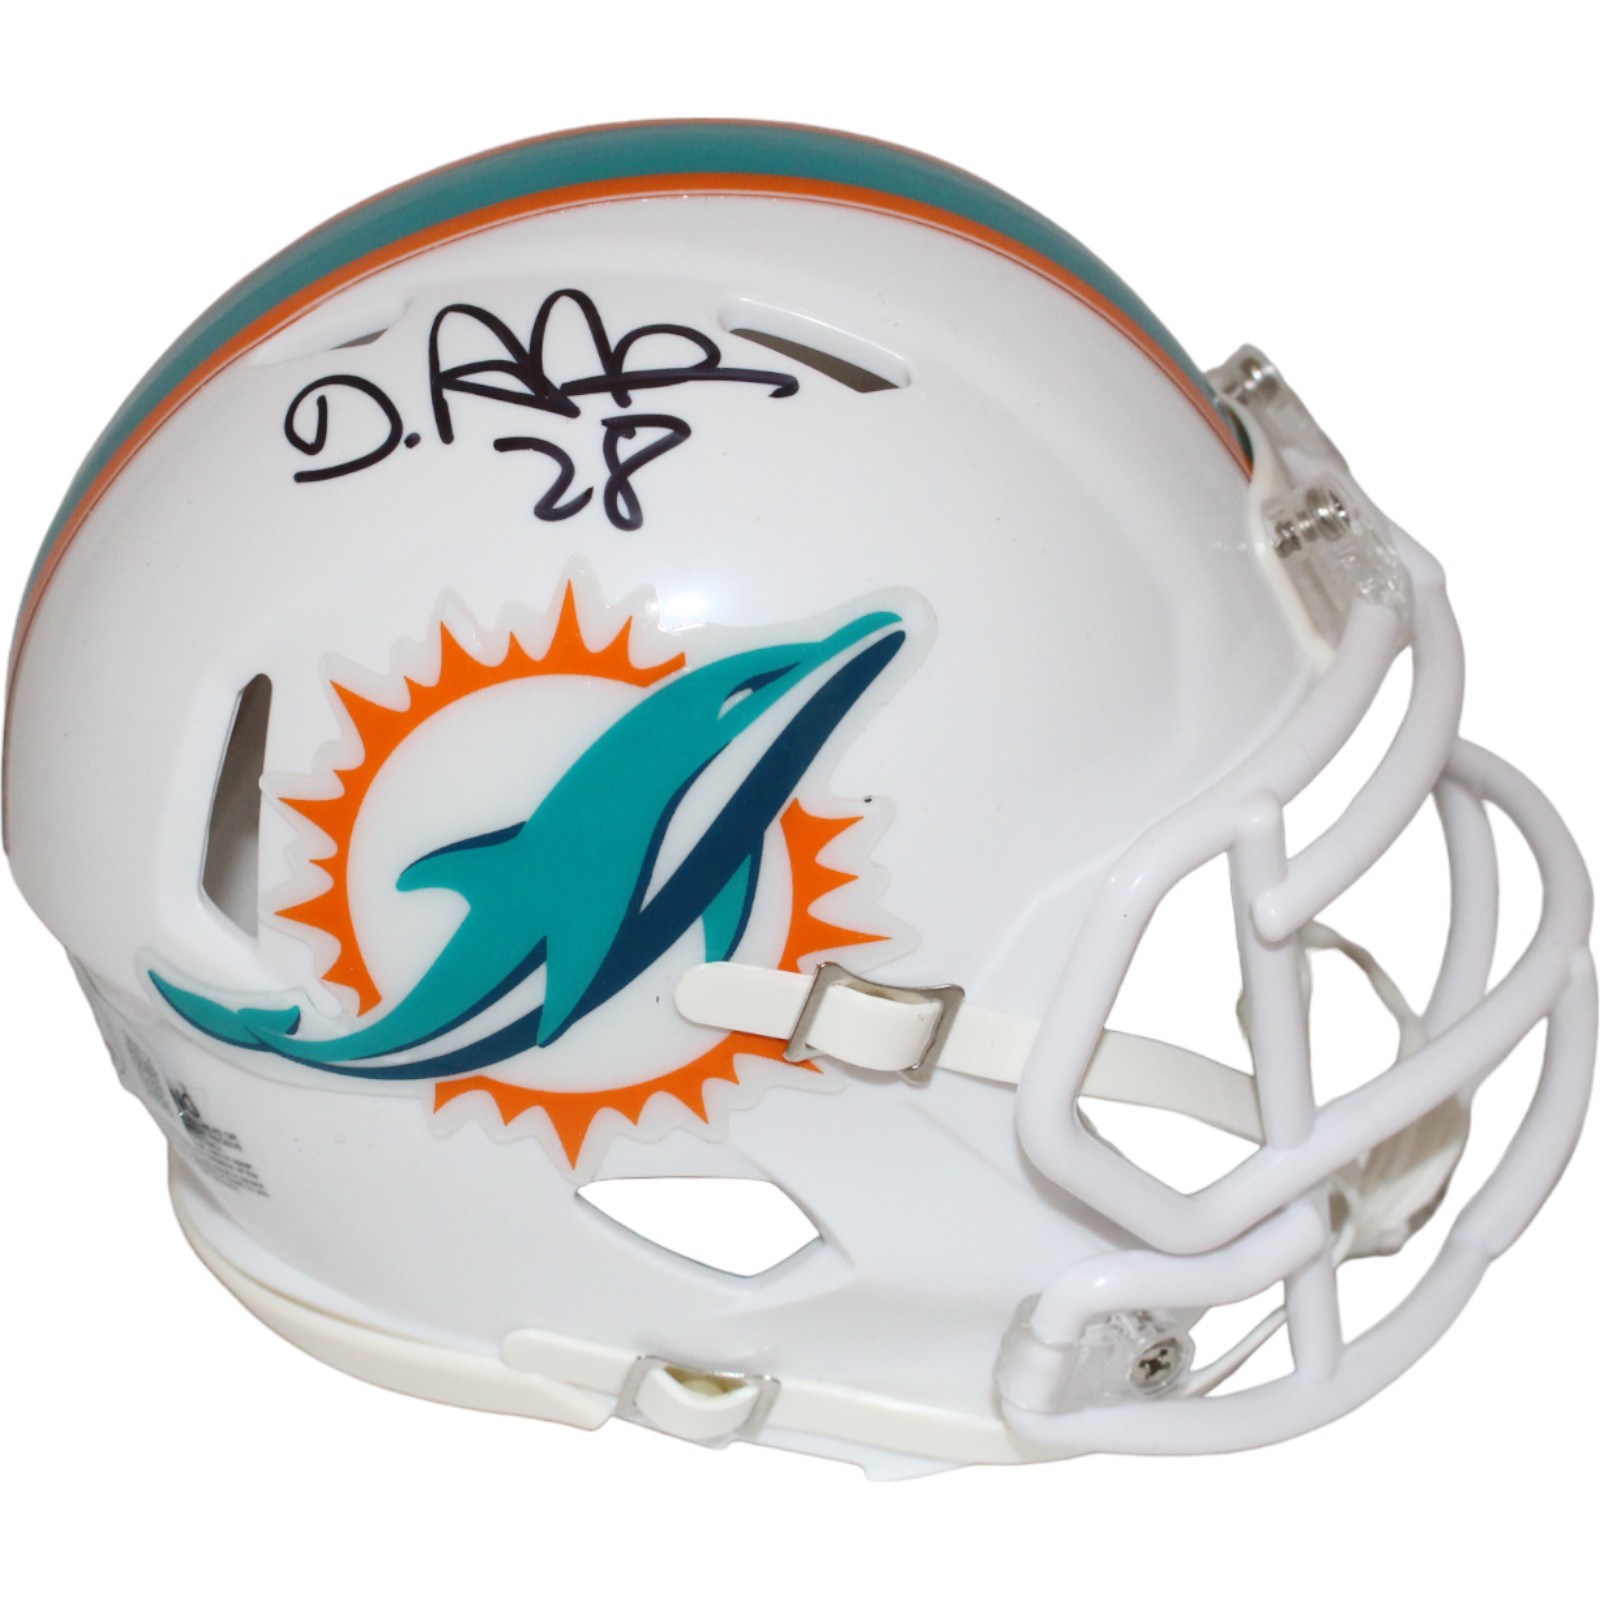 Devon Achane Autographed/Signed Miami Dolphins Mini Helmet Beckett